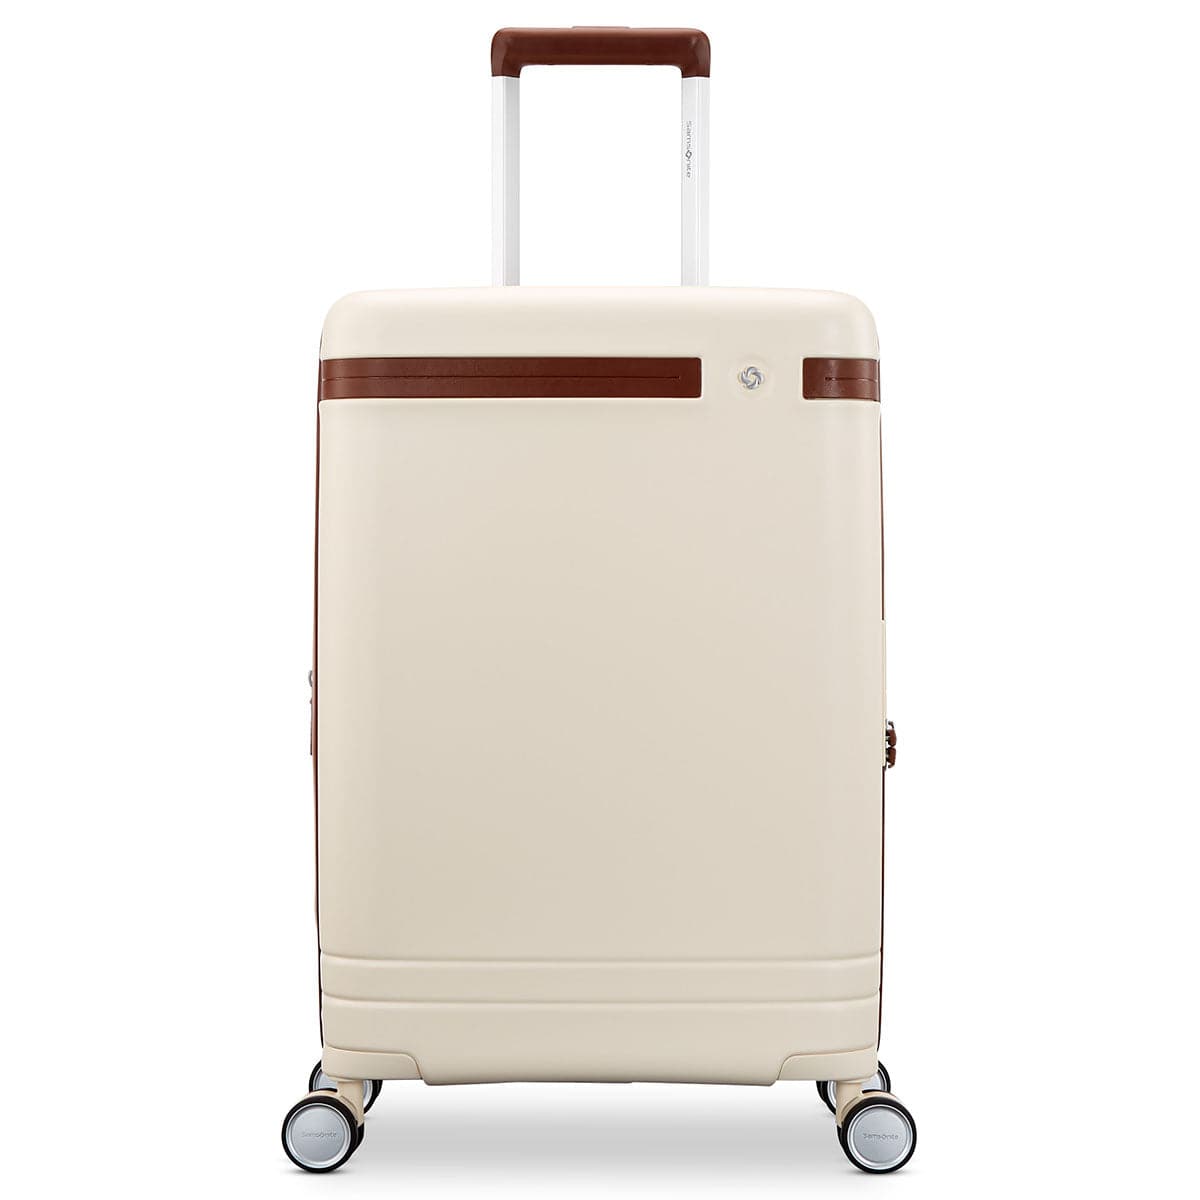 Samsonite Virtuosa Expandale Carry On Luggage